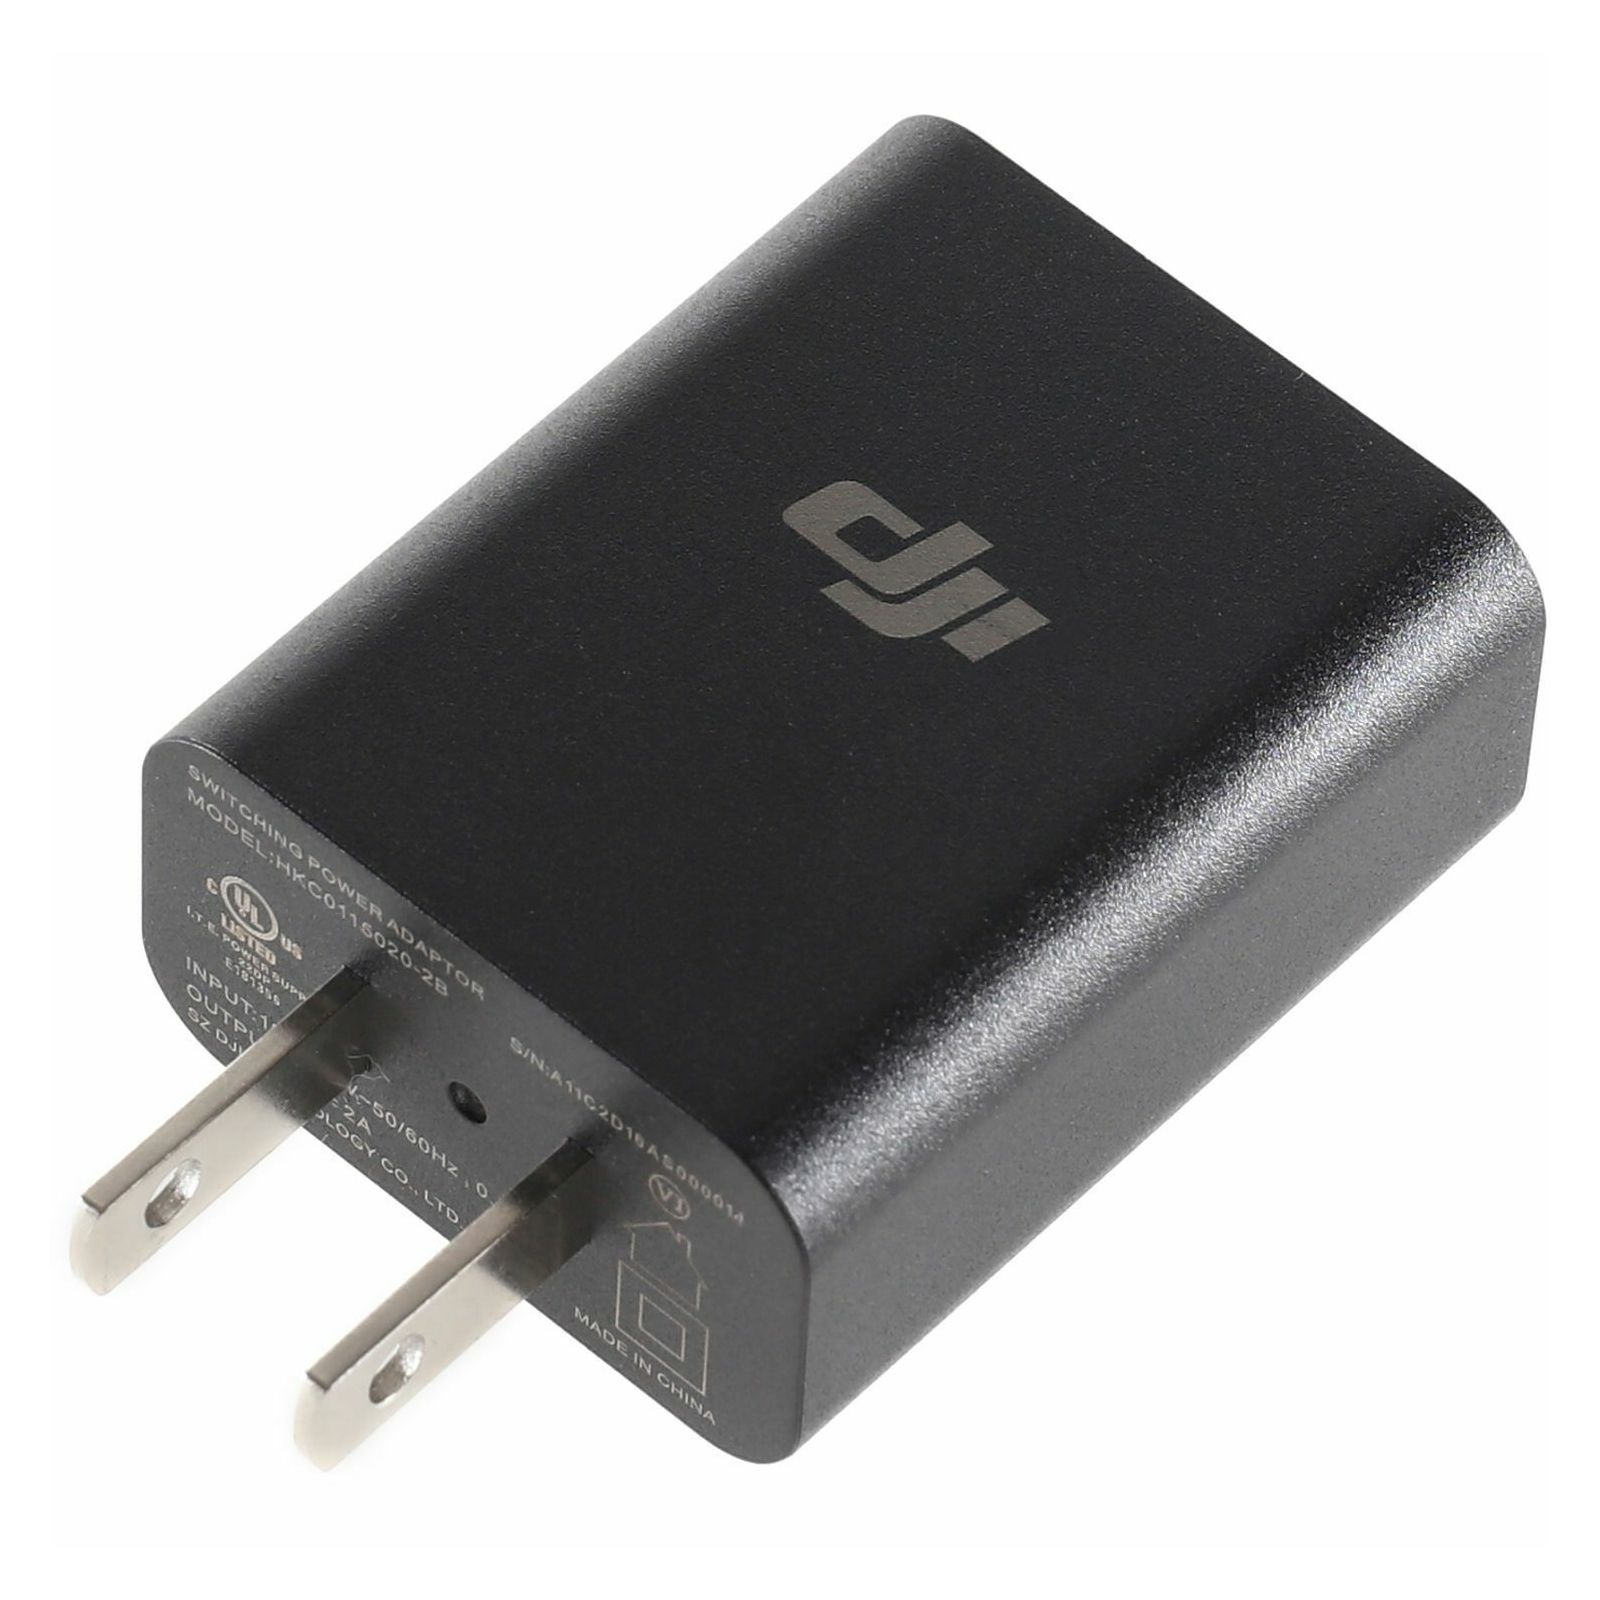 DJI Osmo Mobile Spare Part 08 DJI 10W USB Power Adapter (EU) za punjač napajanje